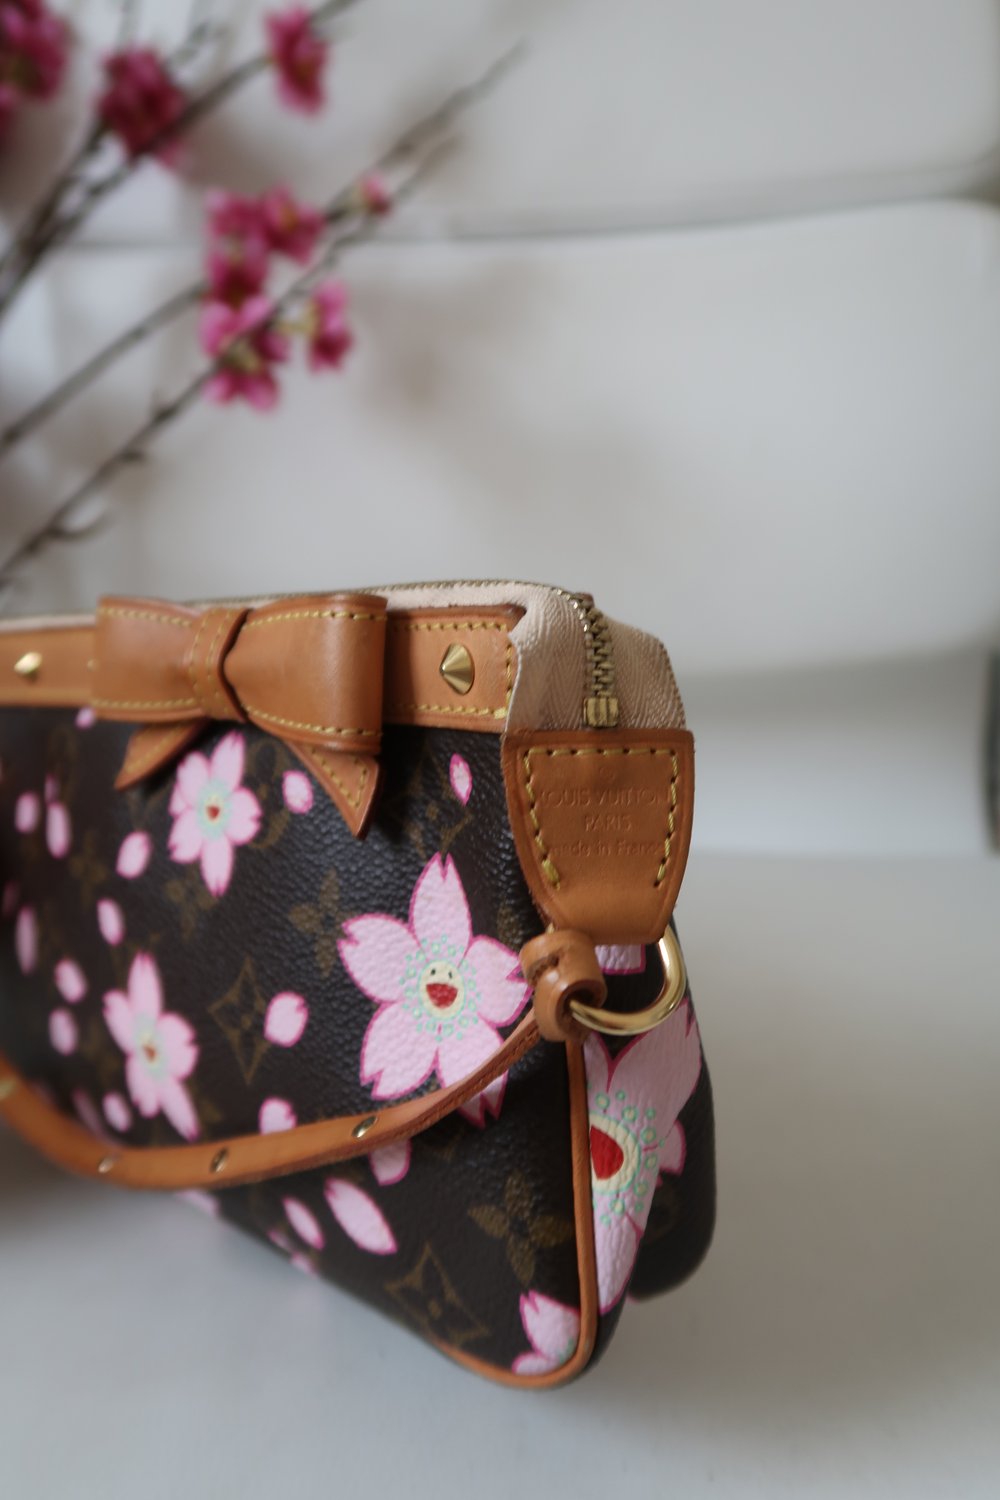 Louis Vuitton Murakami Alma Handbag — Blaise Ruby Loves